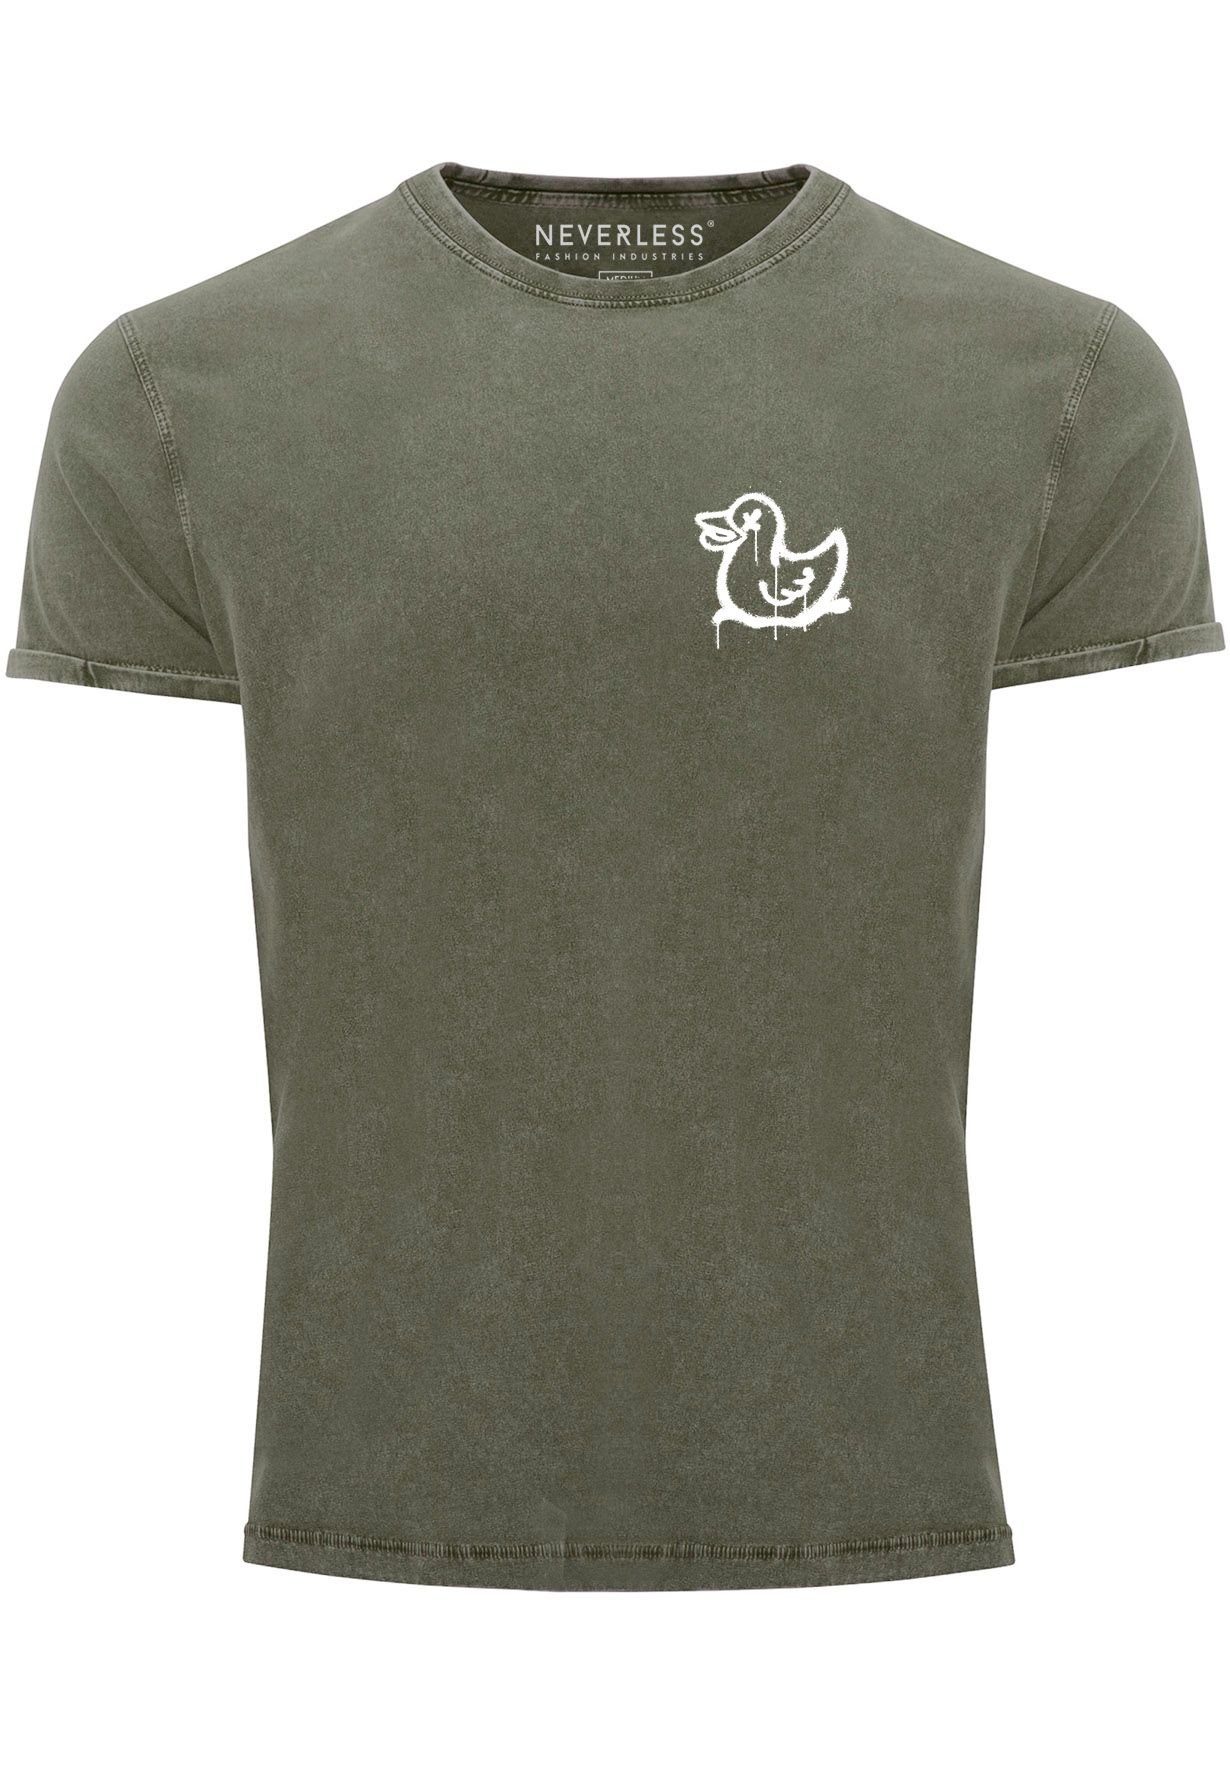 Shirt Drippy Duck Printshirt Neverless Graffiti T-Shir Style Ente mit Herren oliv Print Vintage Print-Shirt